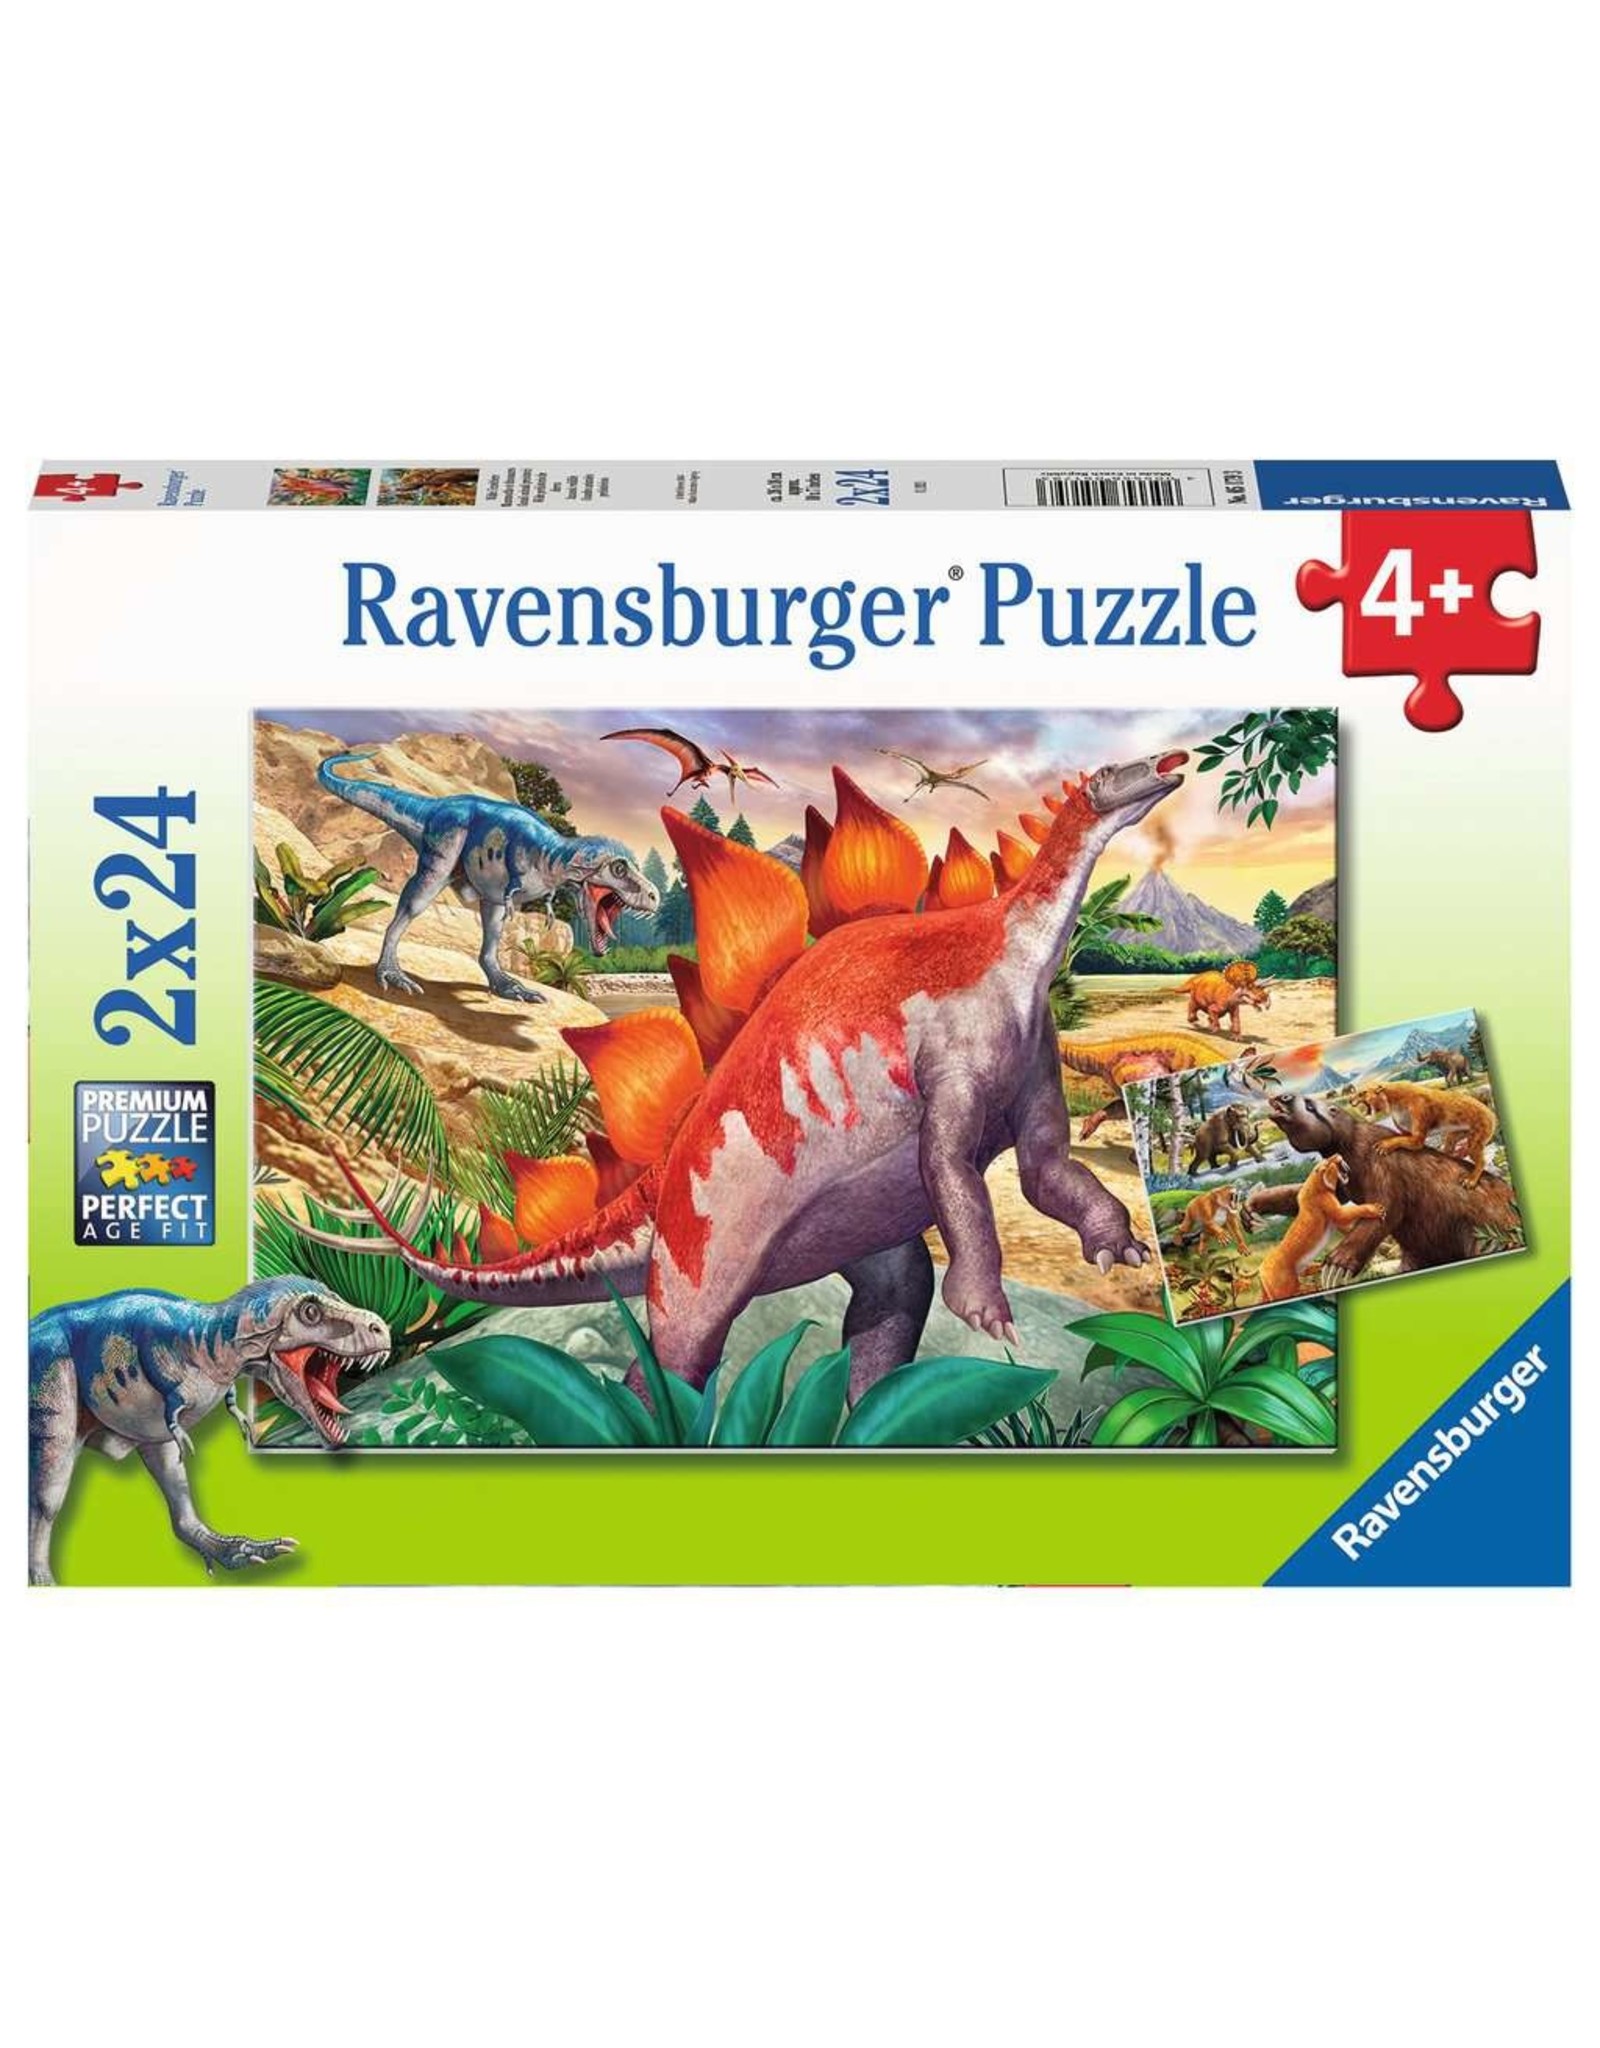 Ravensburger Puzzle Ravensburger 2x24: Jurassic wildlife